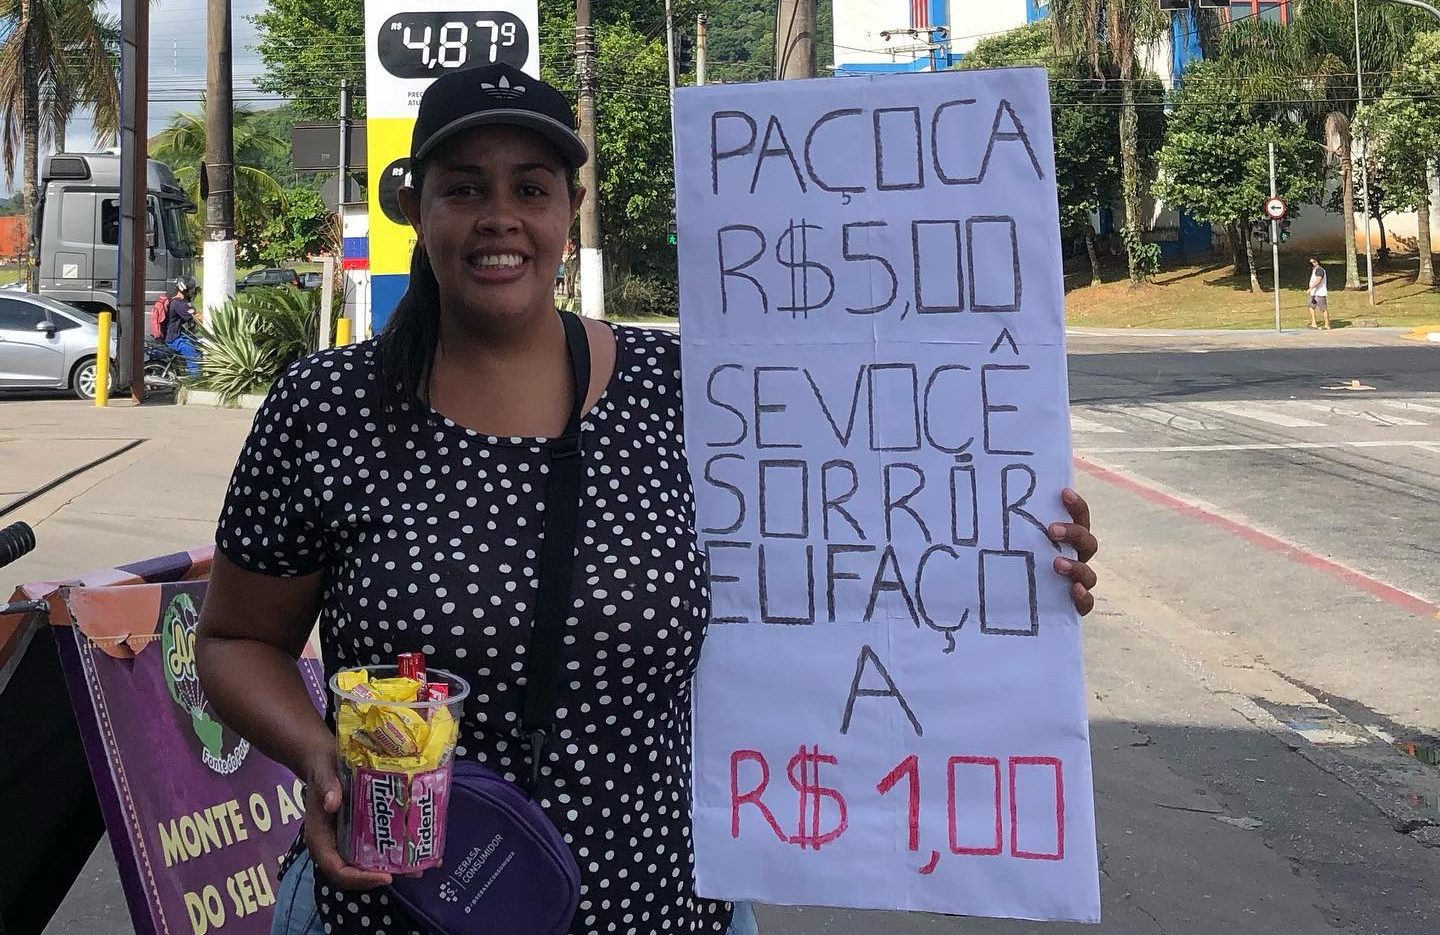 Vendedora ambulante dá desconto de 80% para comprador que sorrir | Jornal da Orla